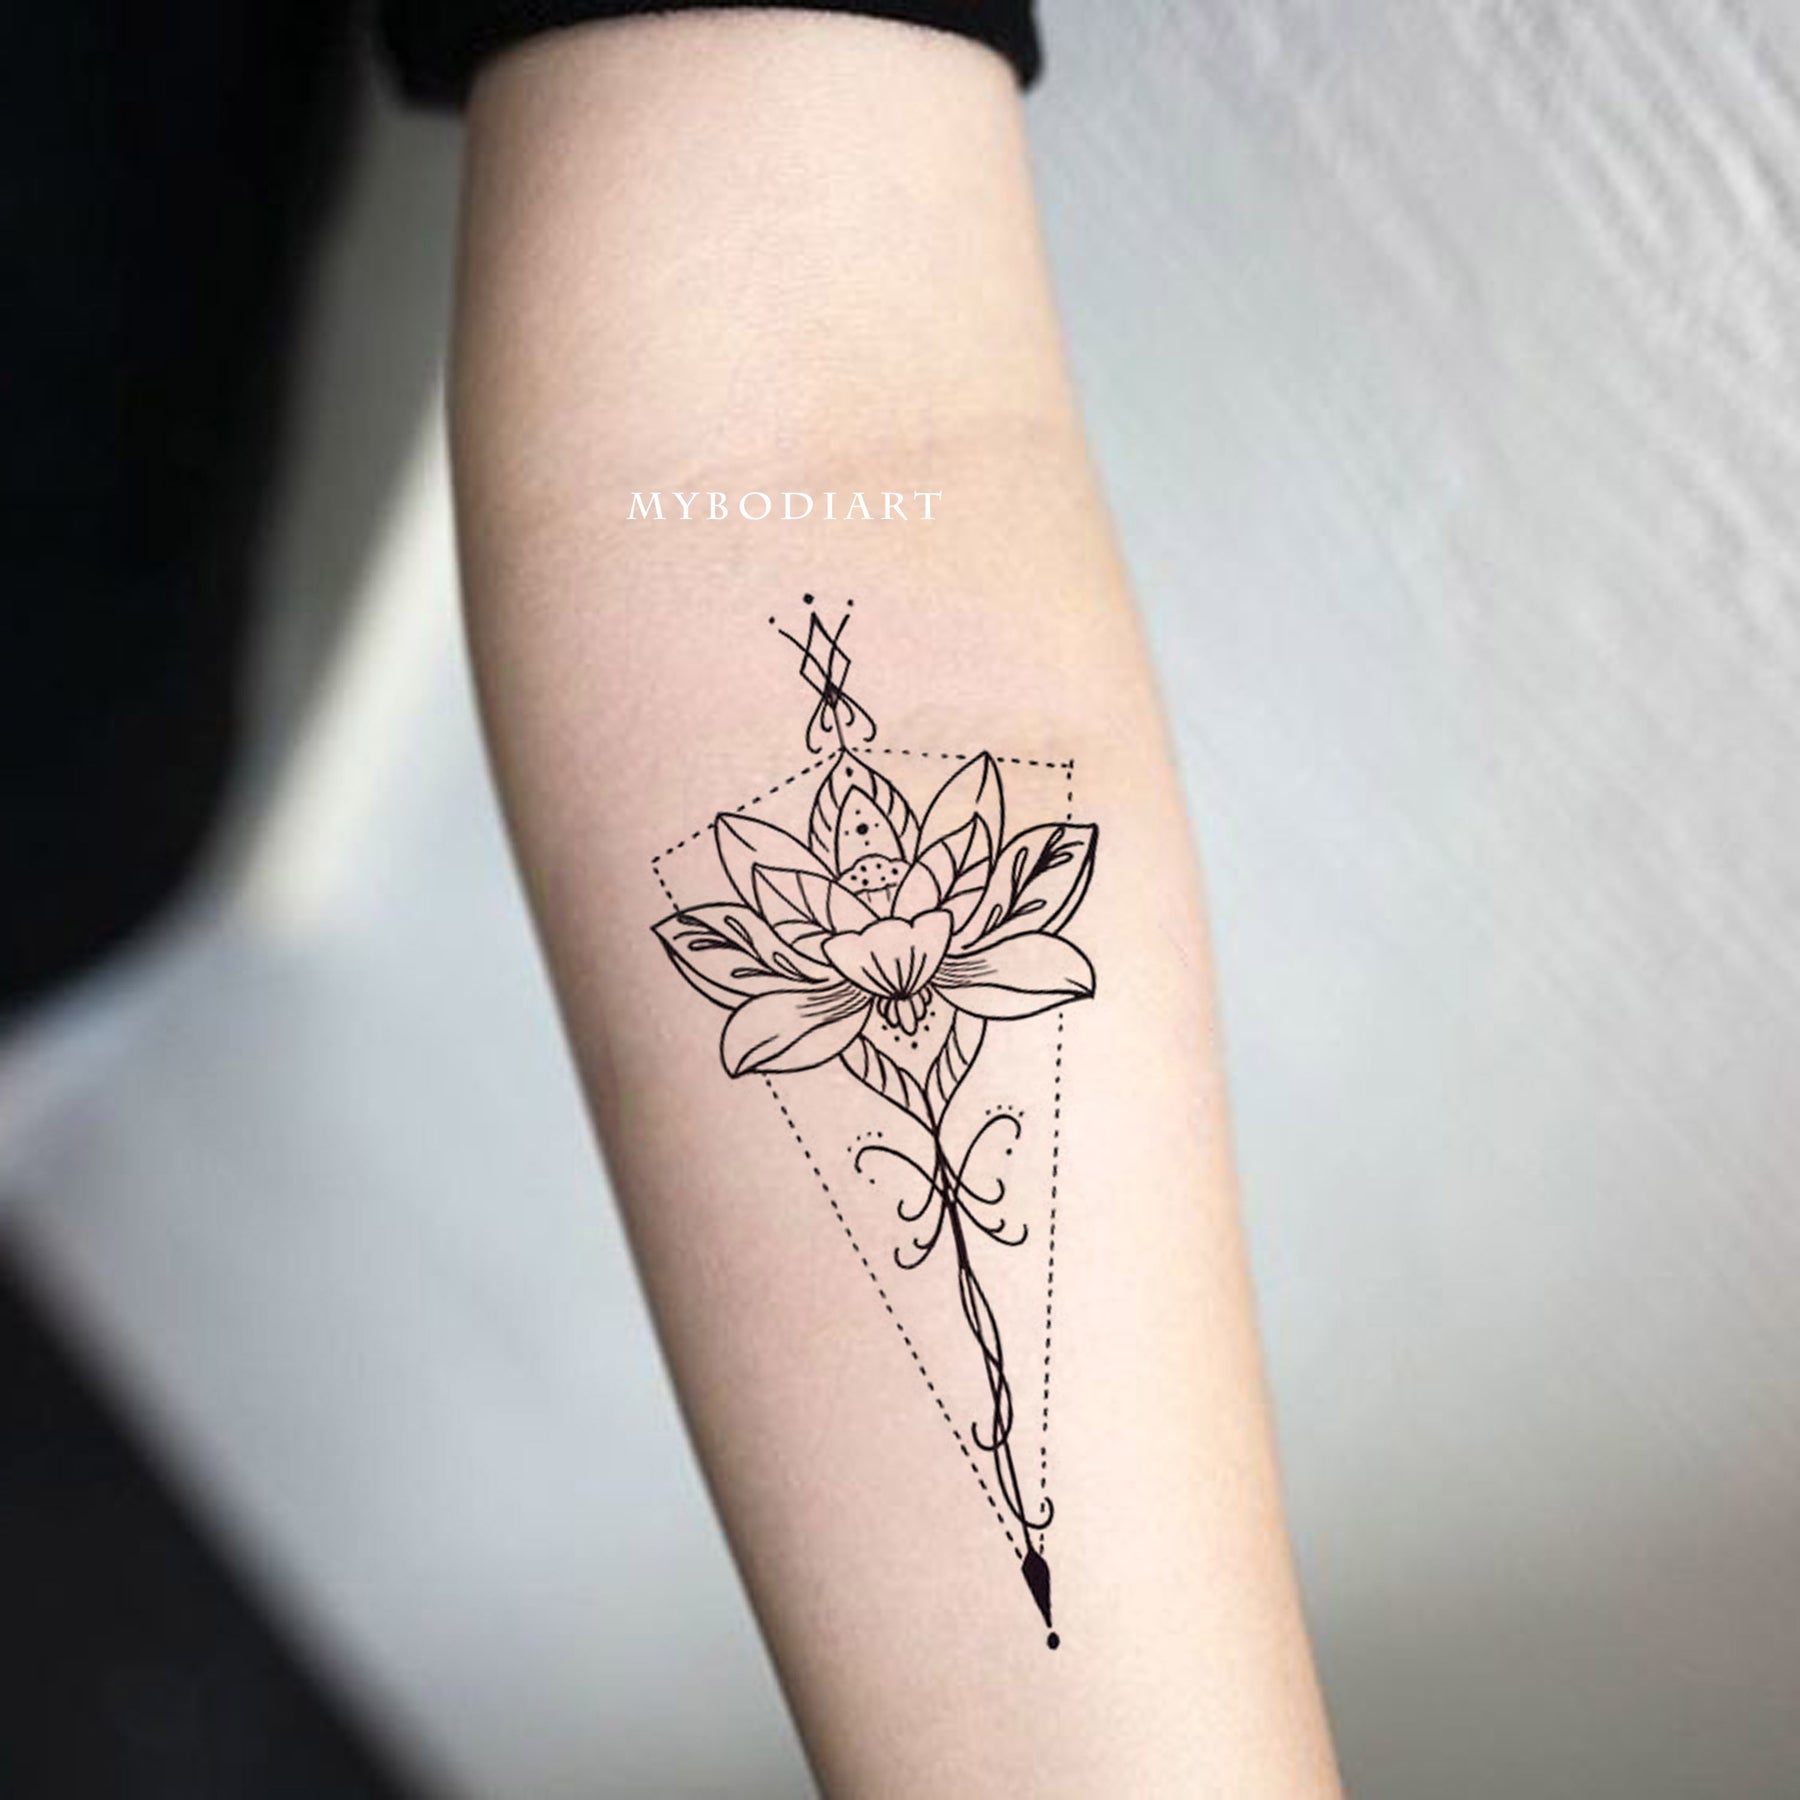 Crazy ink tattoo  Body piercing on X LOTUS FLOWER TATTOO DESIGN By  tattoo artist Kunal Vega For more info visithttpstco1nwj1SJW85  httpstcoRKuJ8q0jps  X